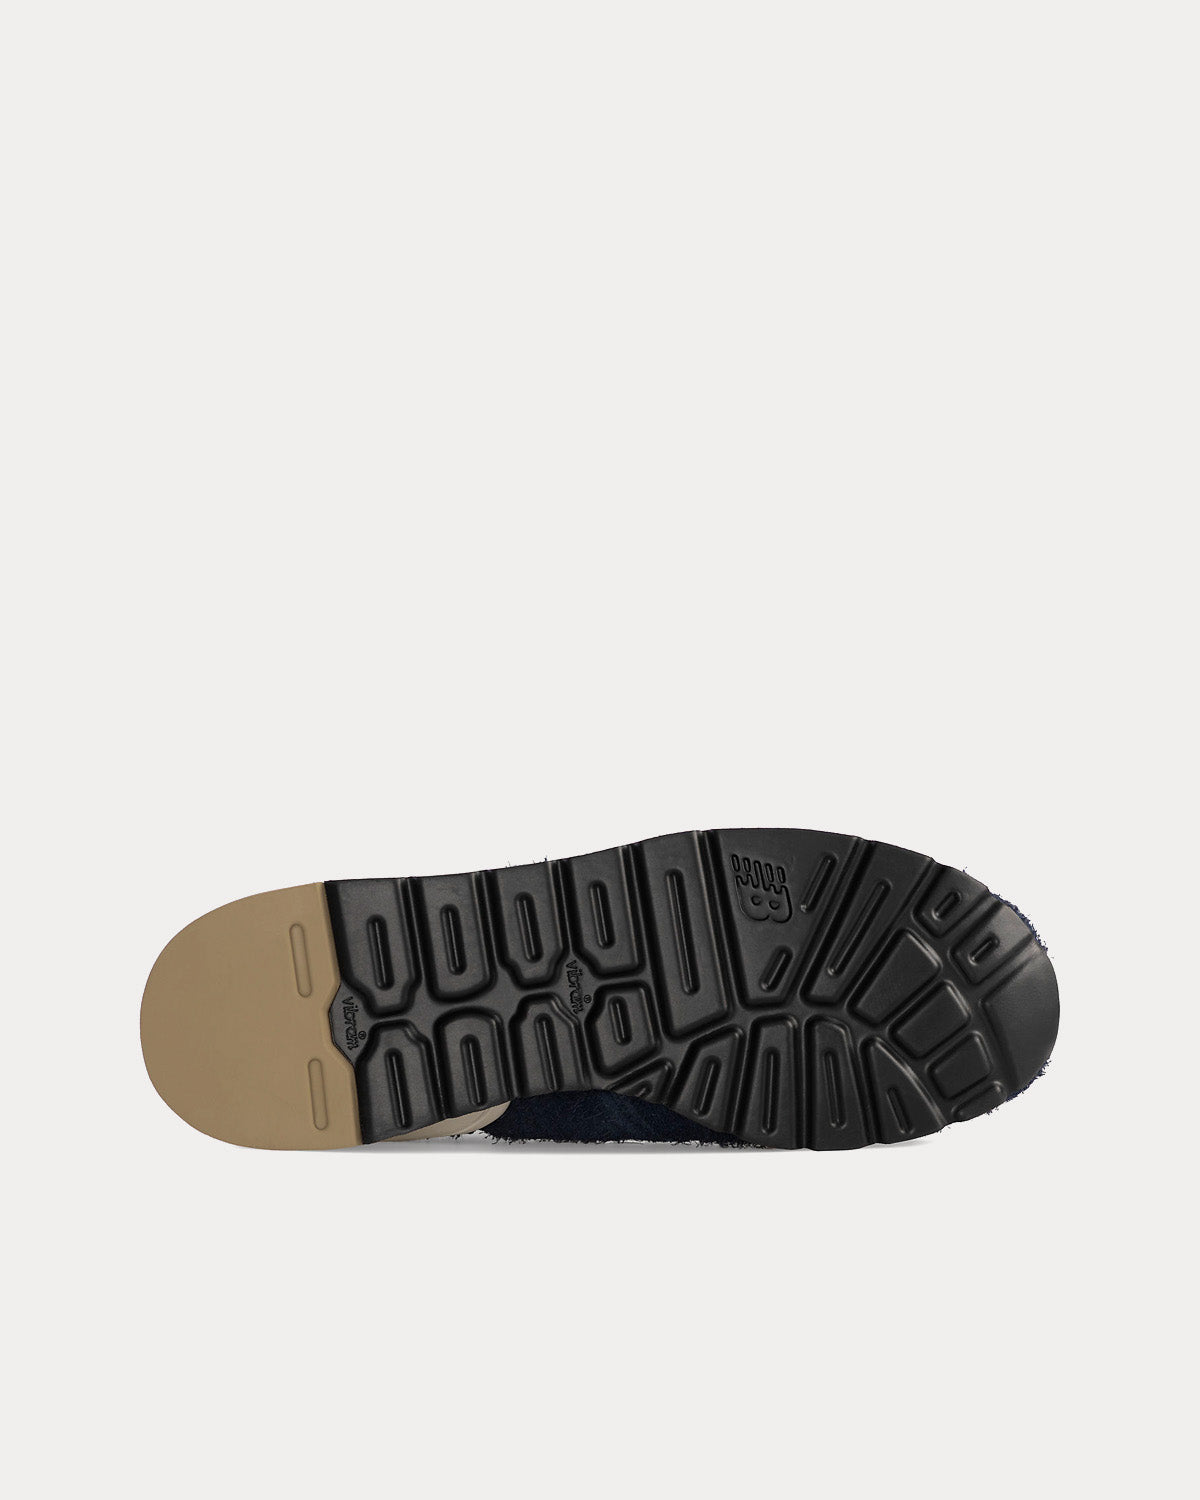 New Balance x Carhartt WIP - MADE in USA 990v1 Dark Grey / Steel Grey Low Top Sneakers